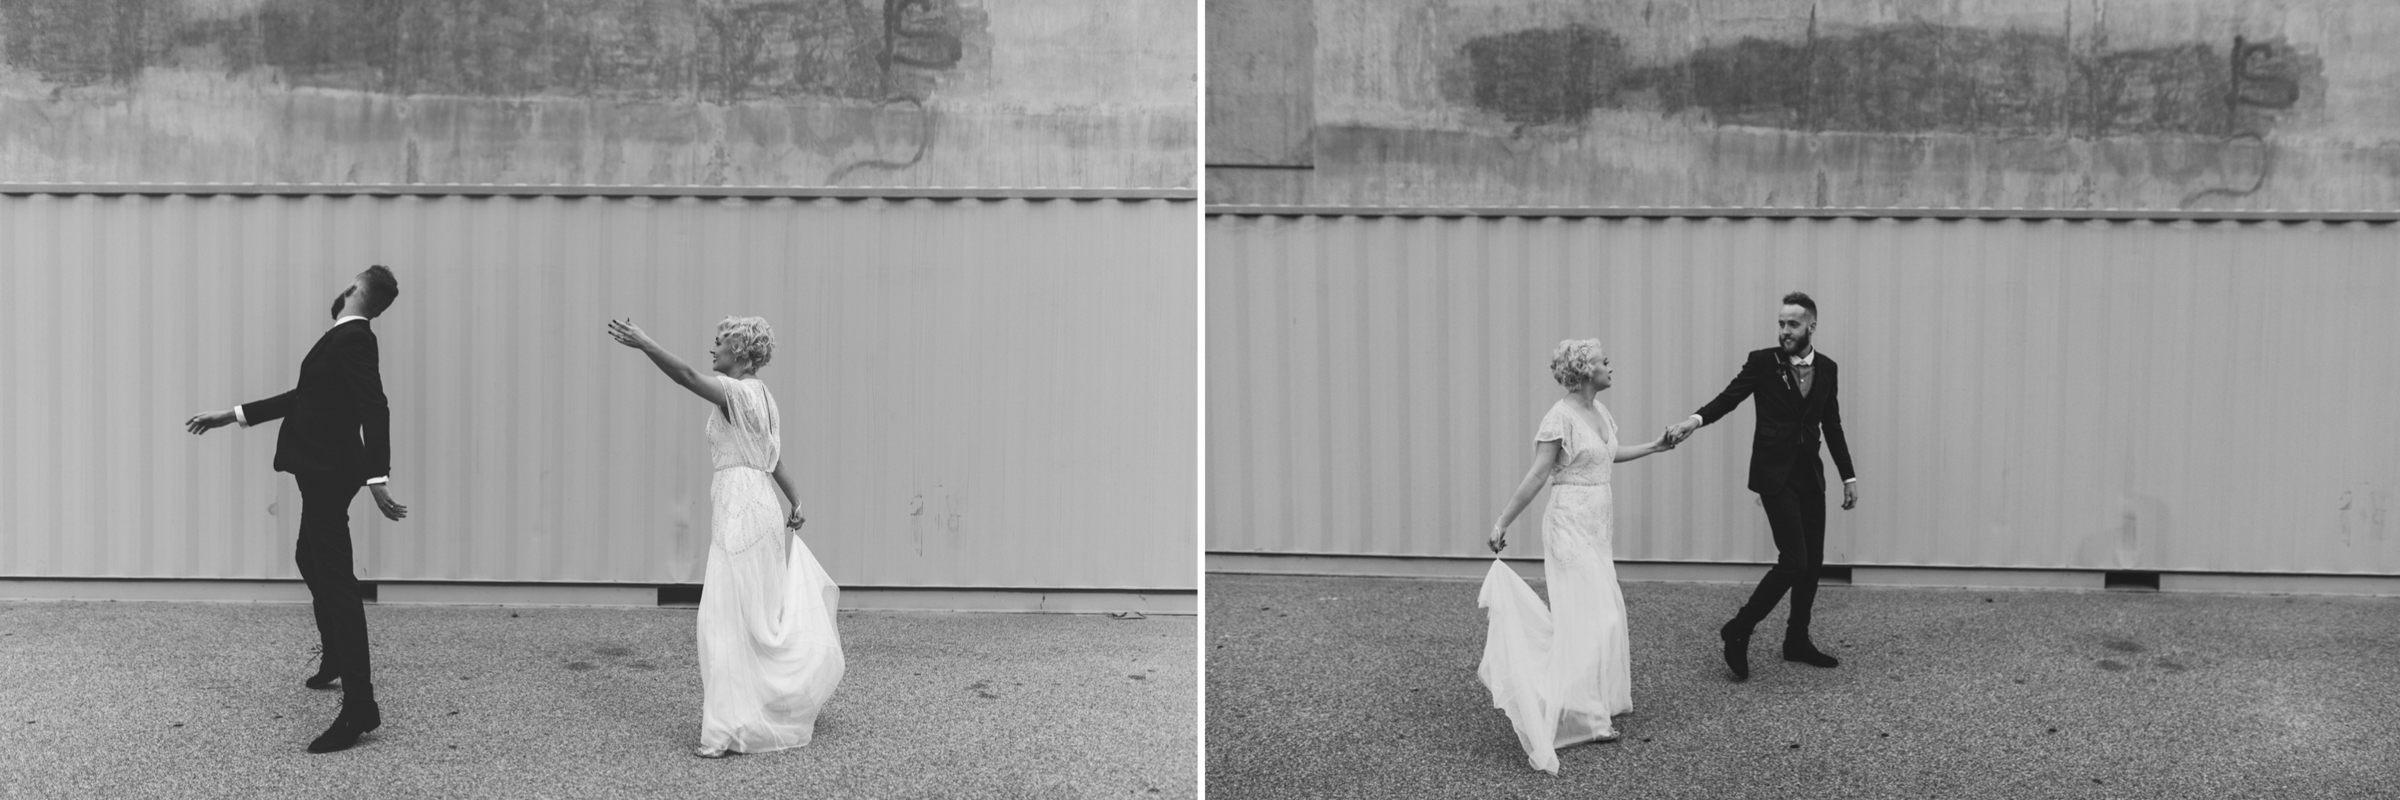 ©Isaiah + Taylor Photography - Studio 11 Wedding, Los Angeles Wedding Photographer-145.jpg